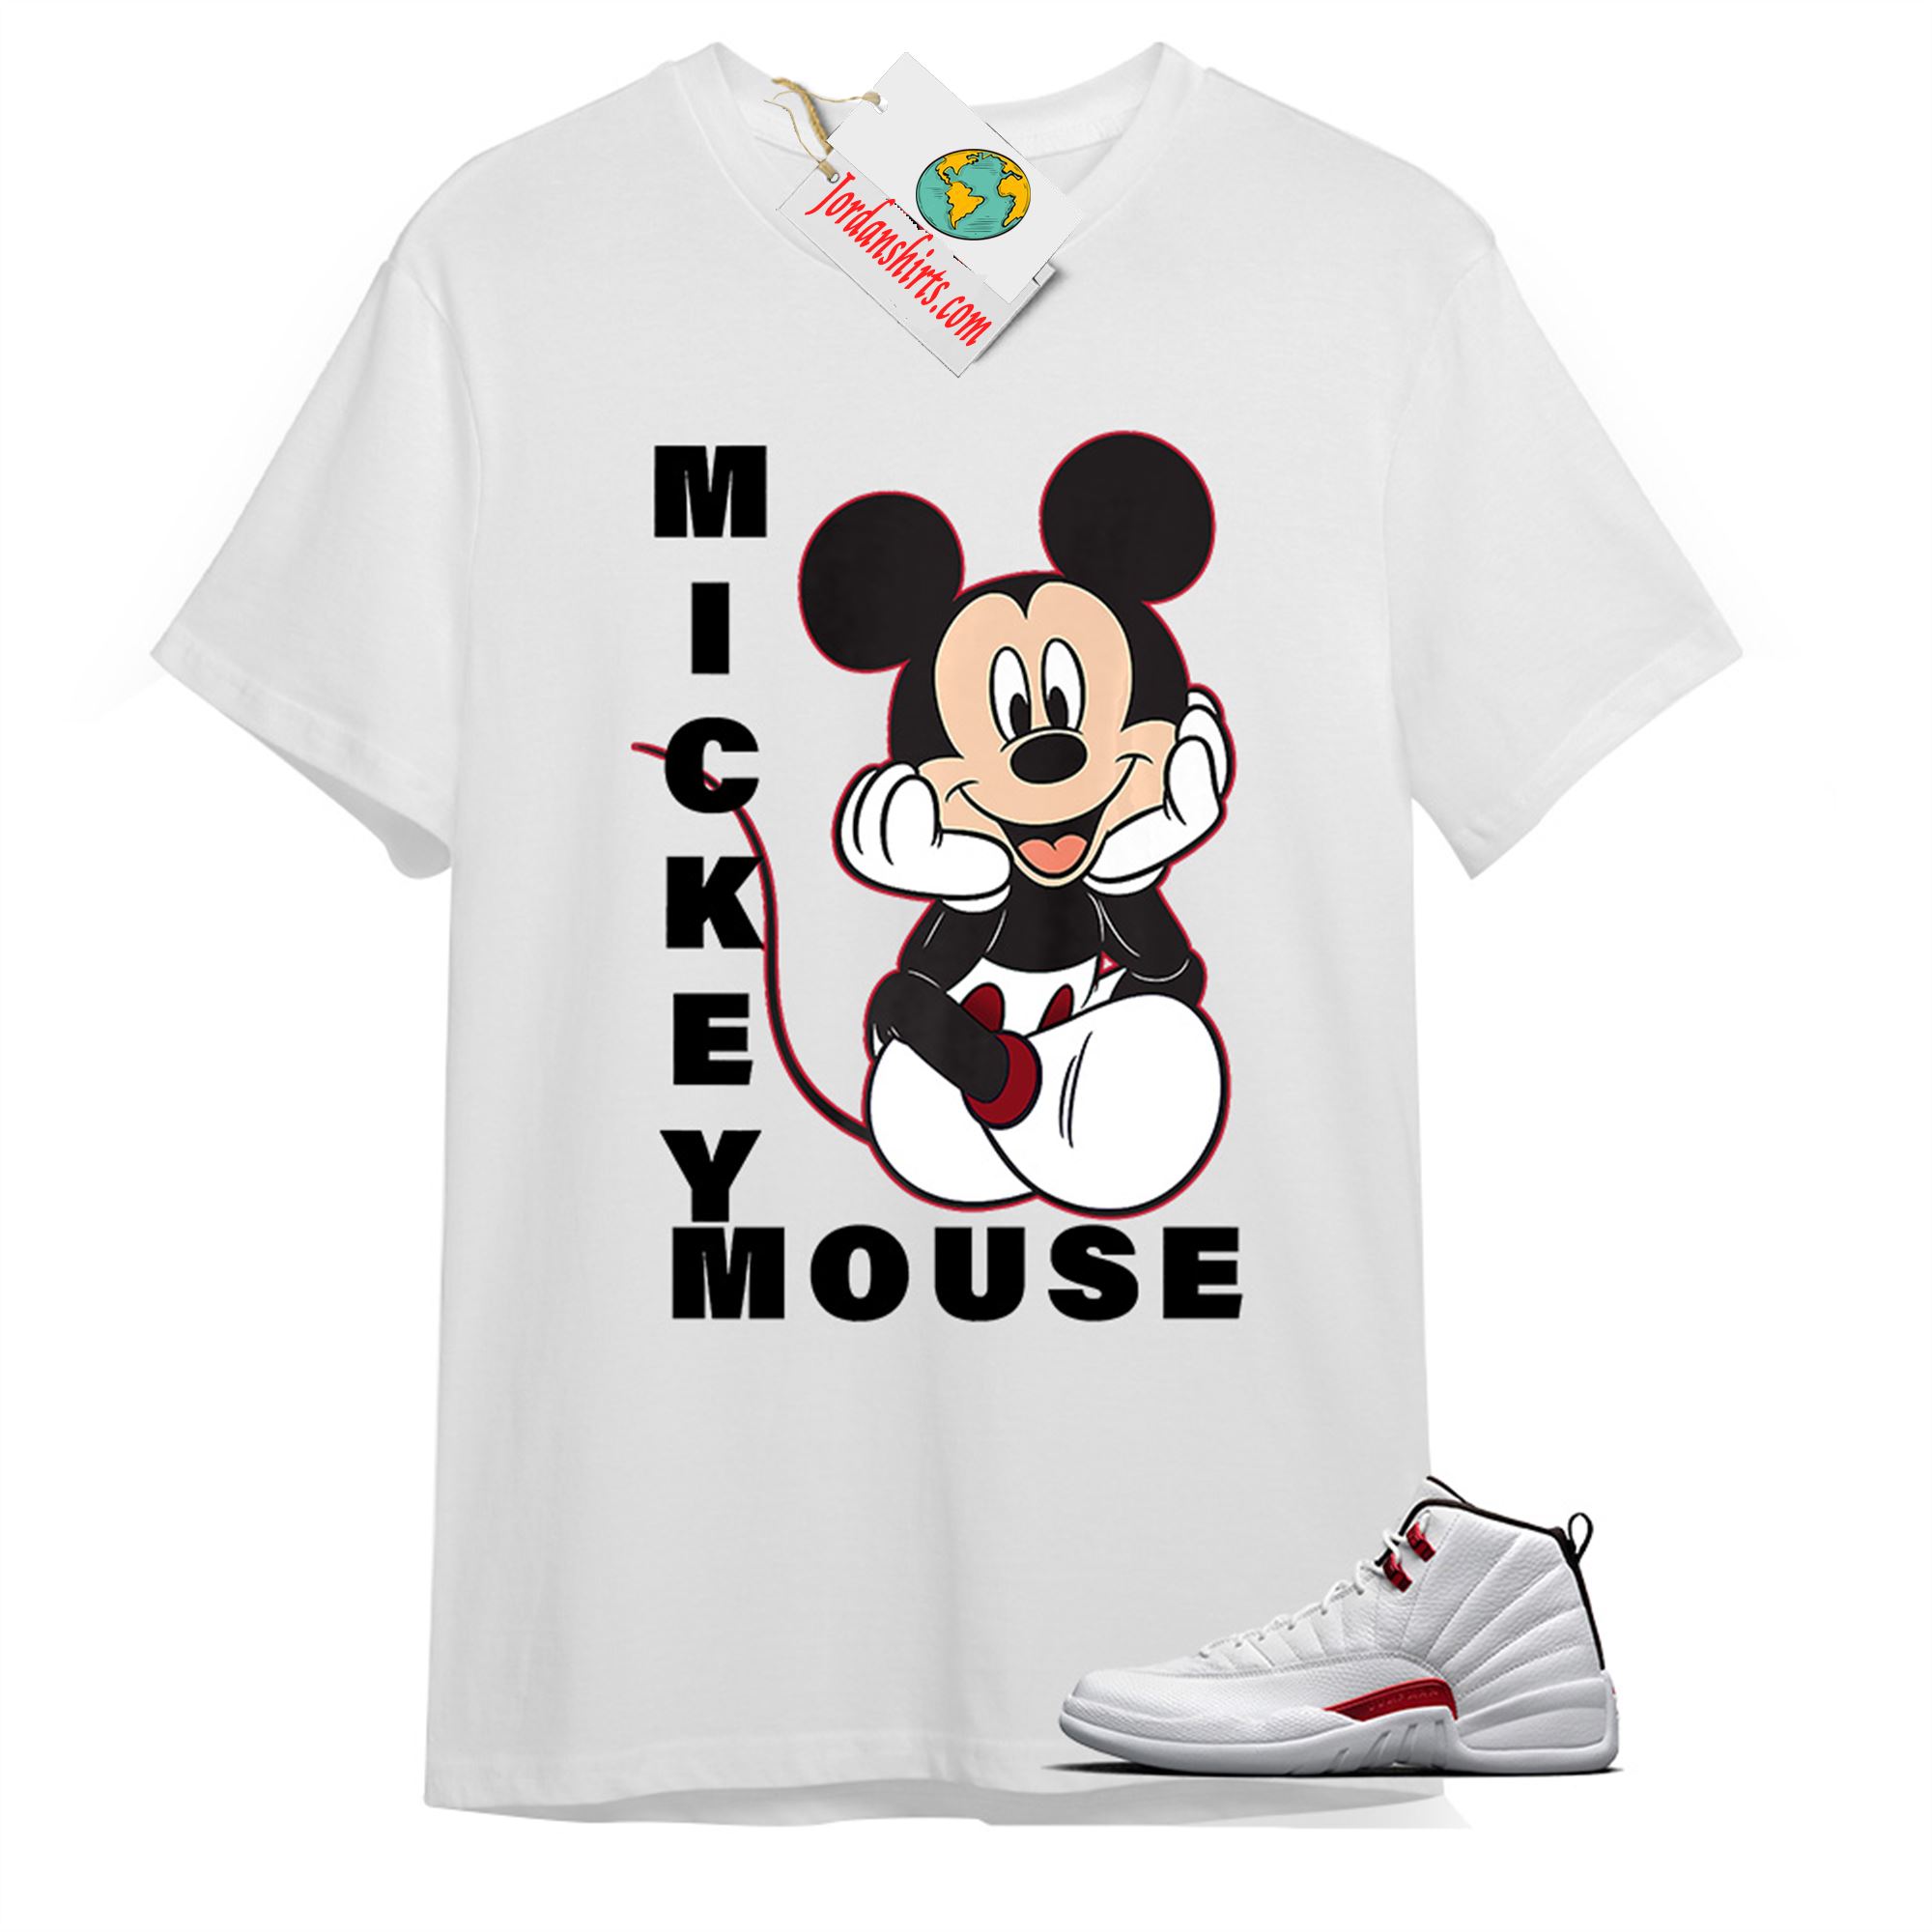 Jordan 12 Shirt, Disney Mickey Mouse Hands In Face White T-shirt Air Jordan 12 Twist 12s Size Up To 5xl